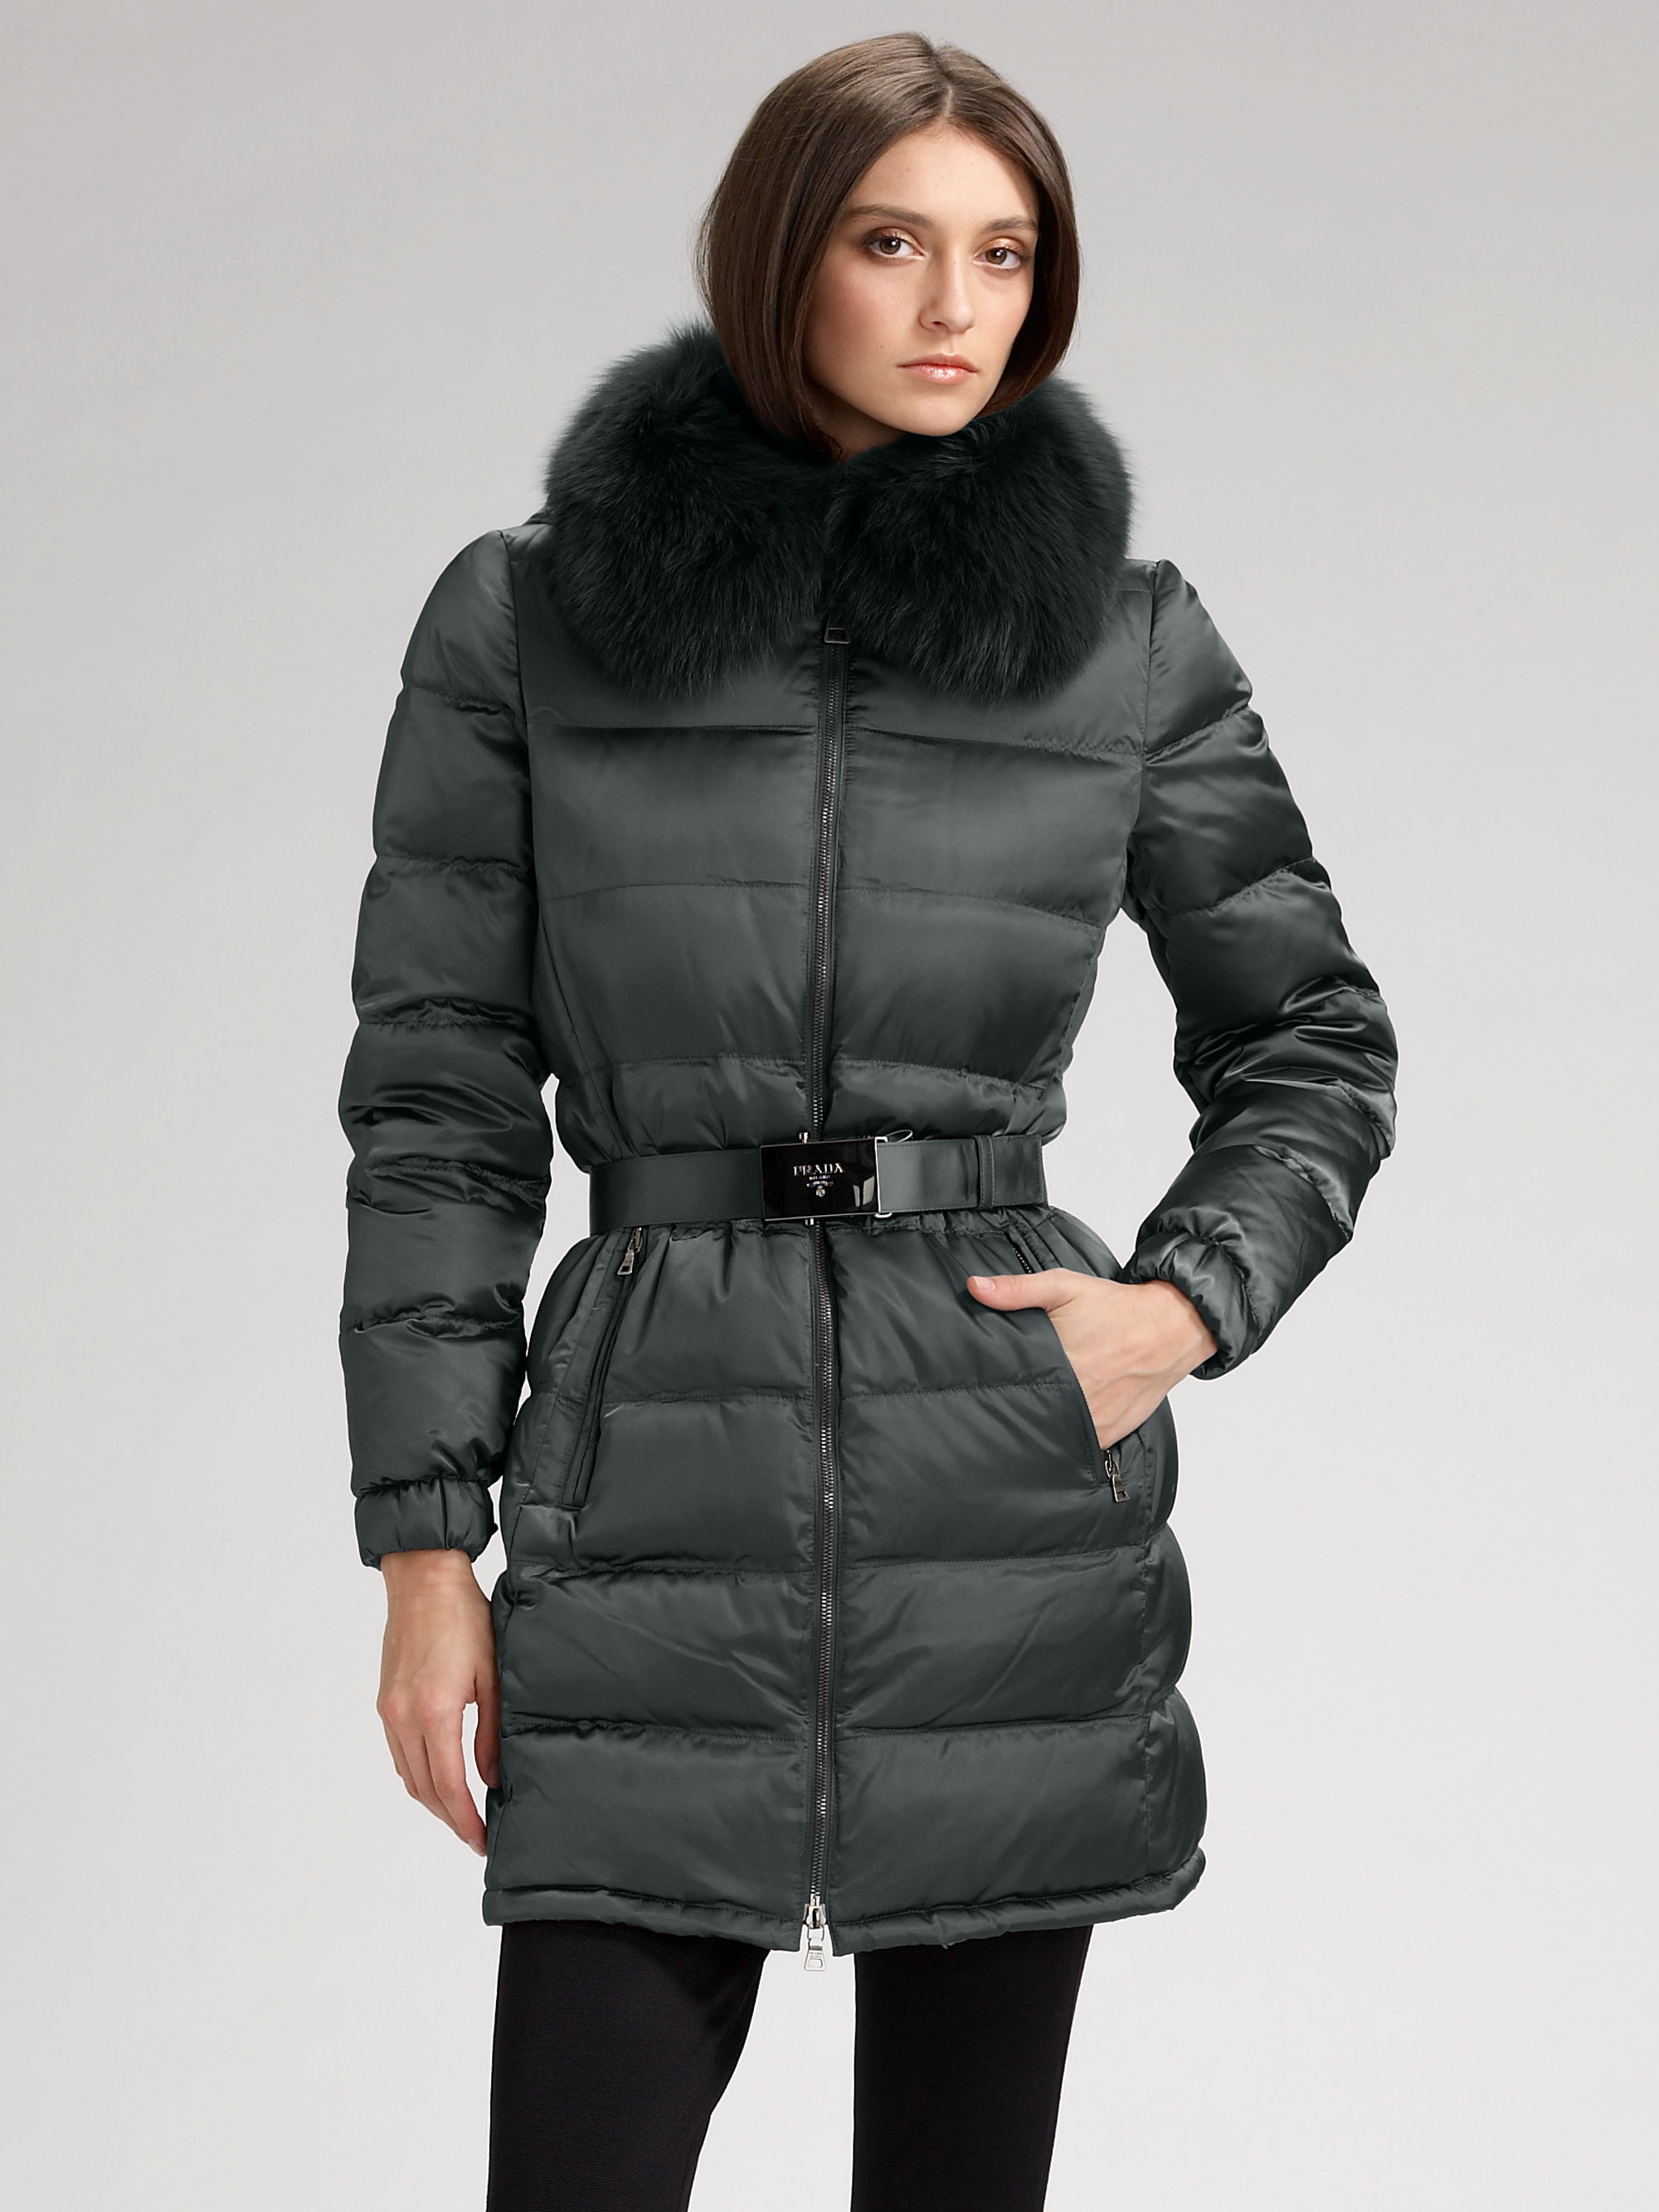 Buy prada puffer coat women's cheap online